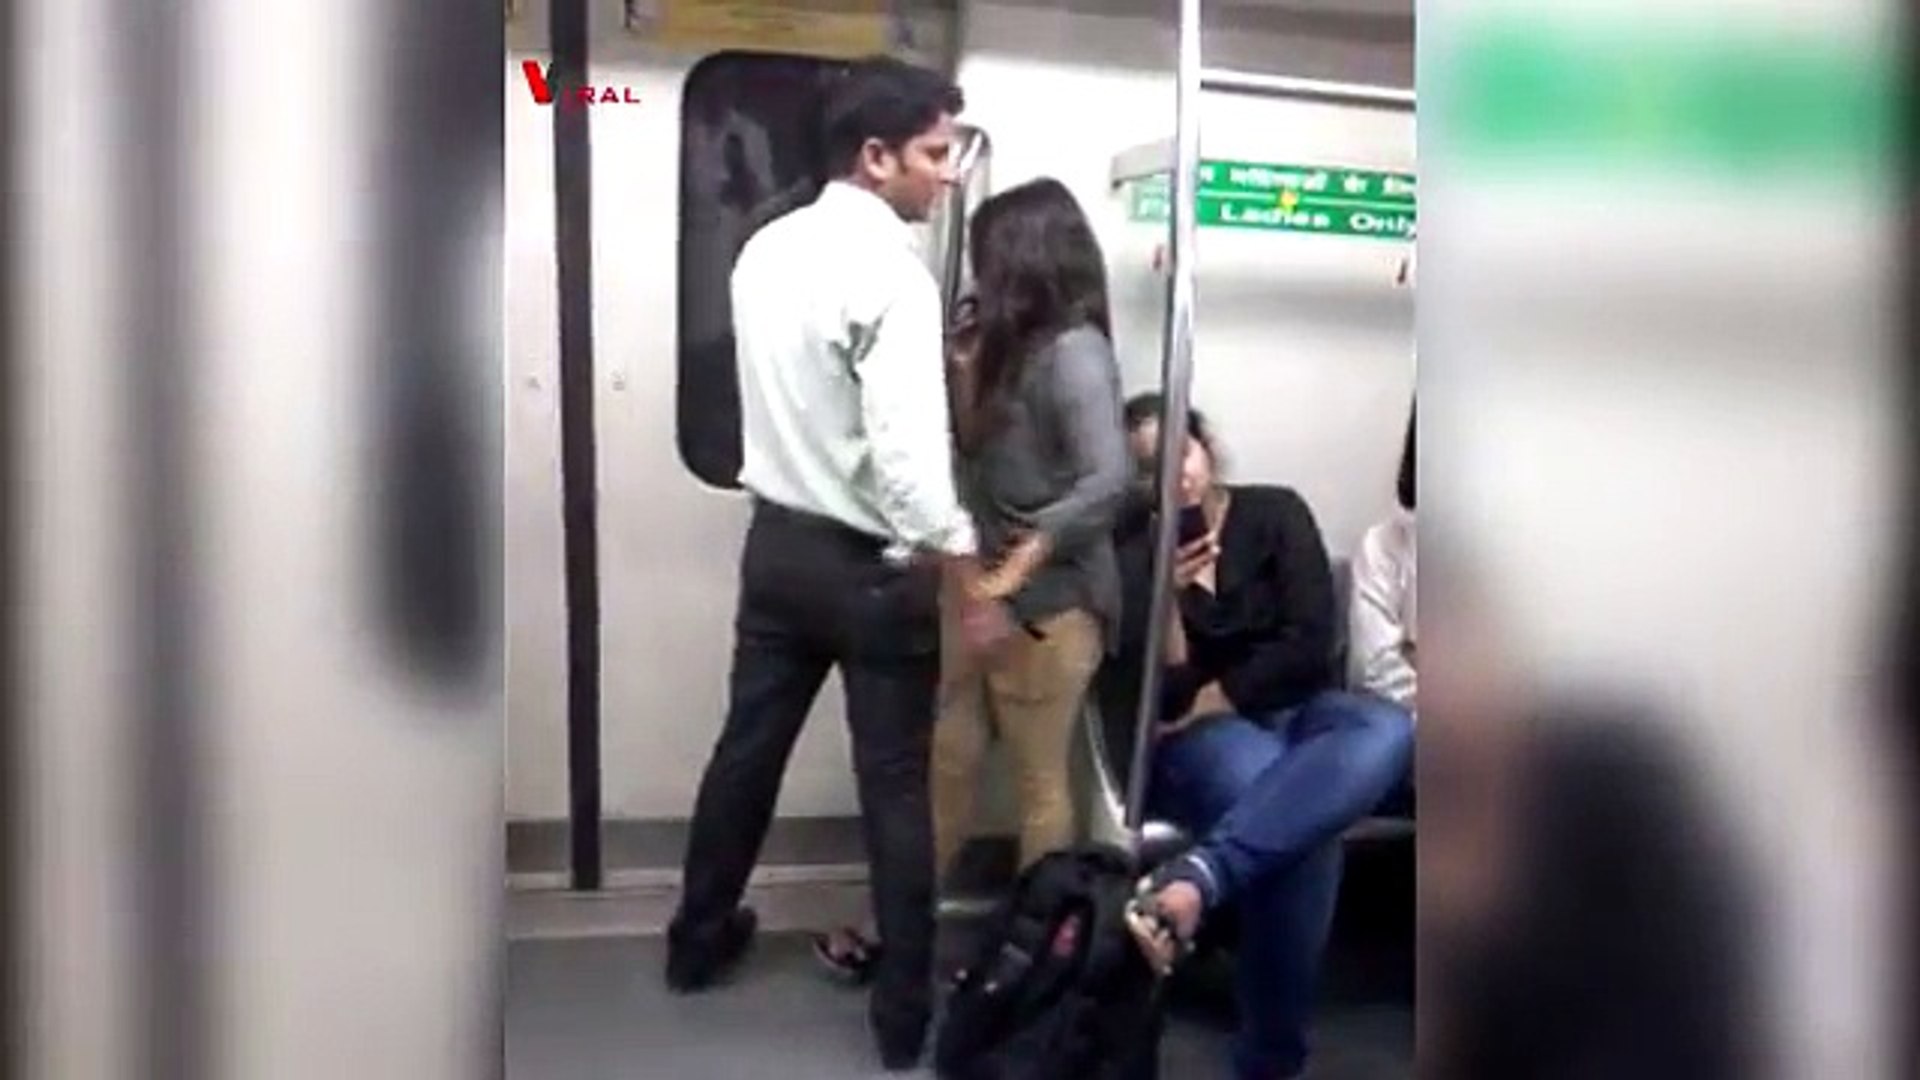 Leaked MS - Open R0mance in Delhi Metro !! - video Dailymotion